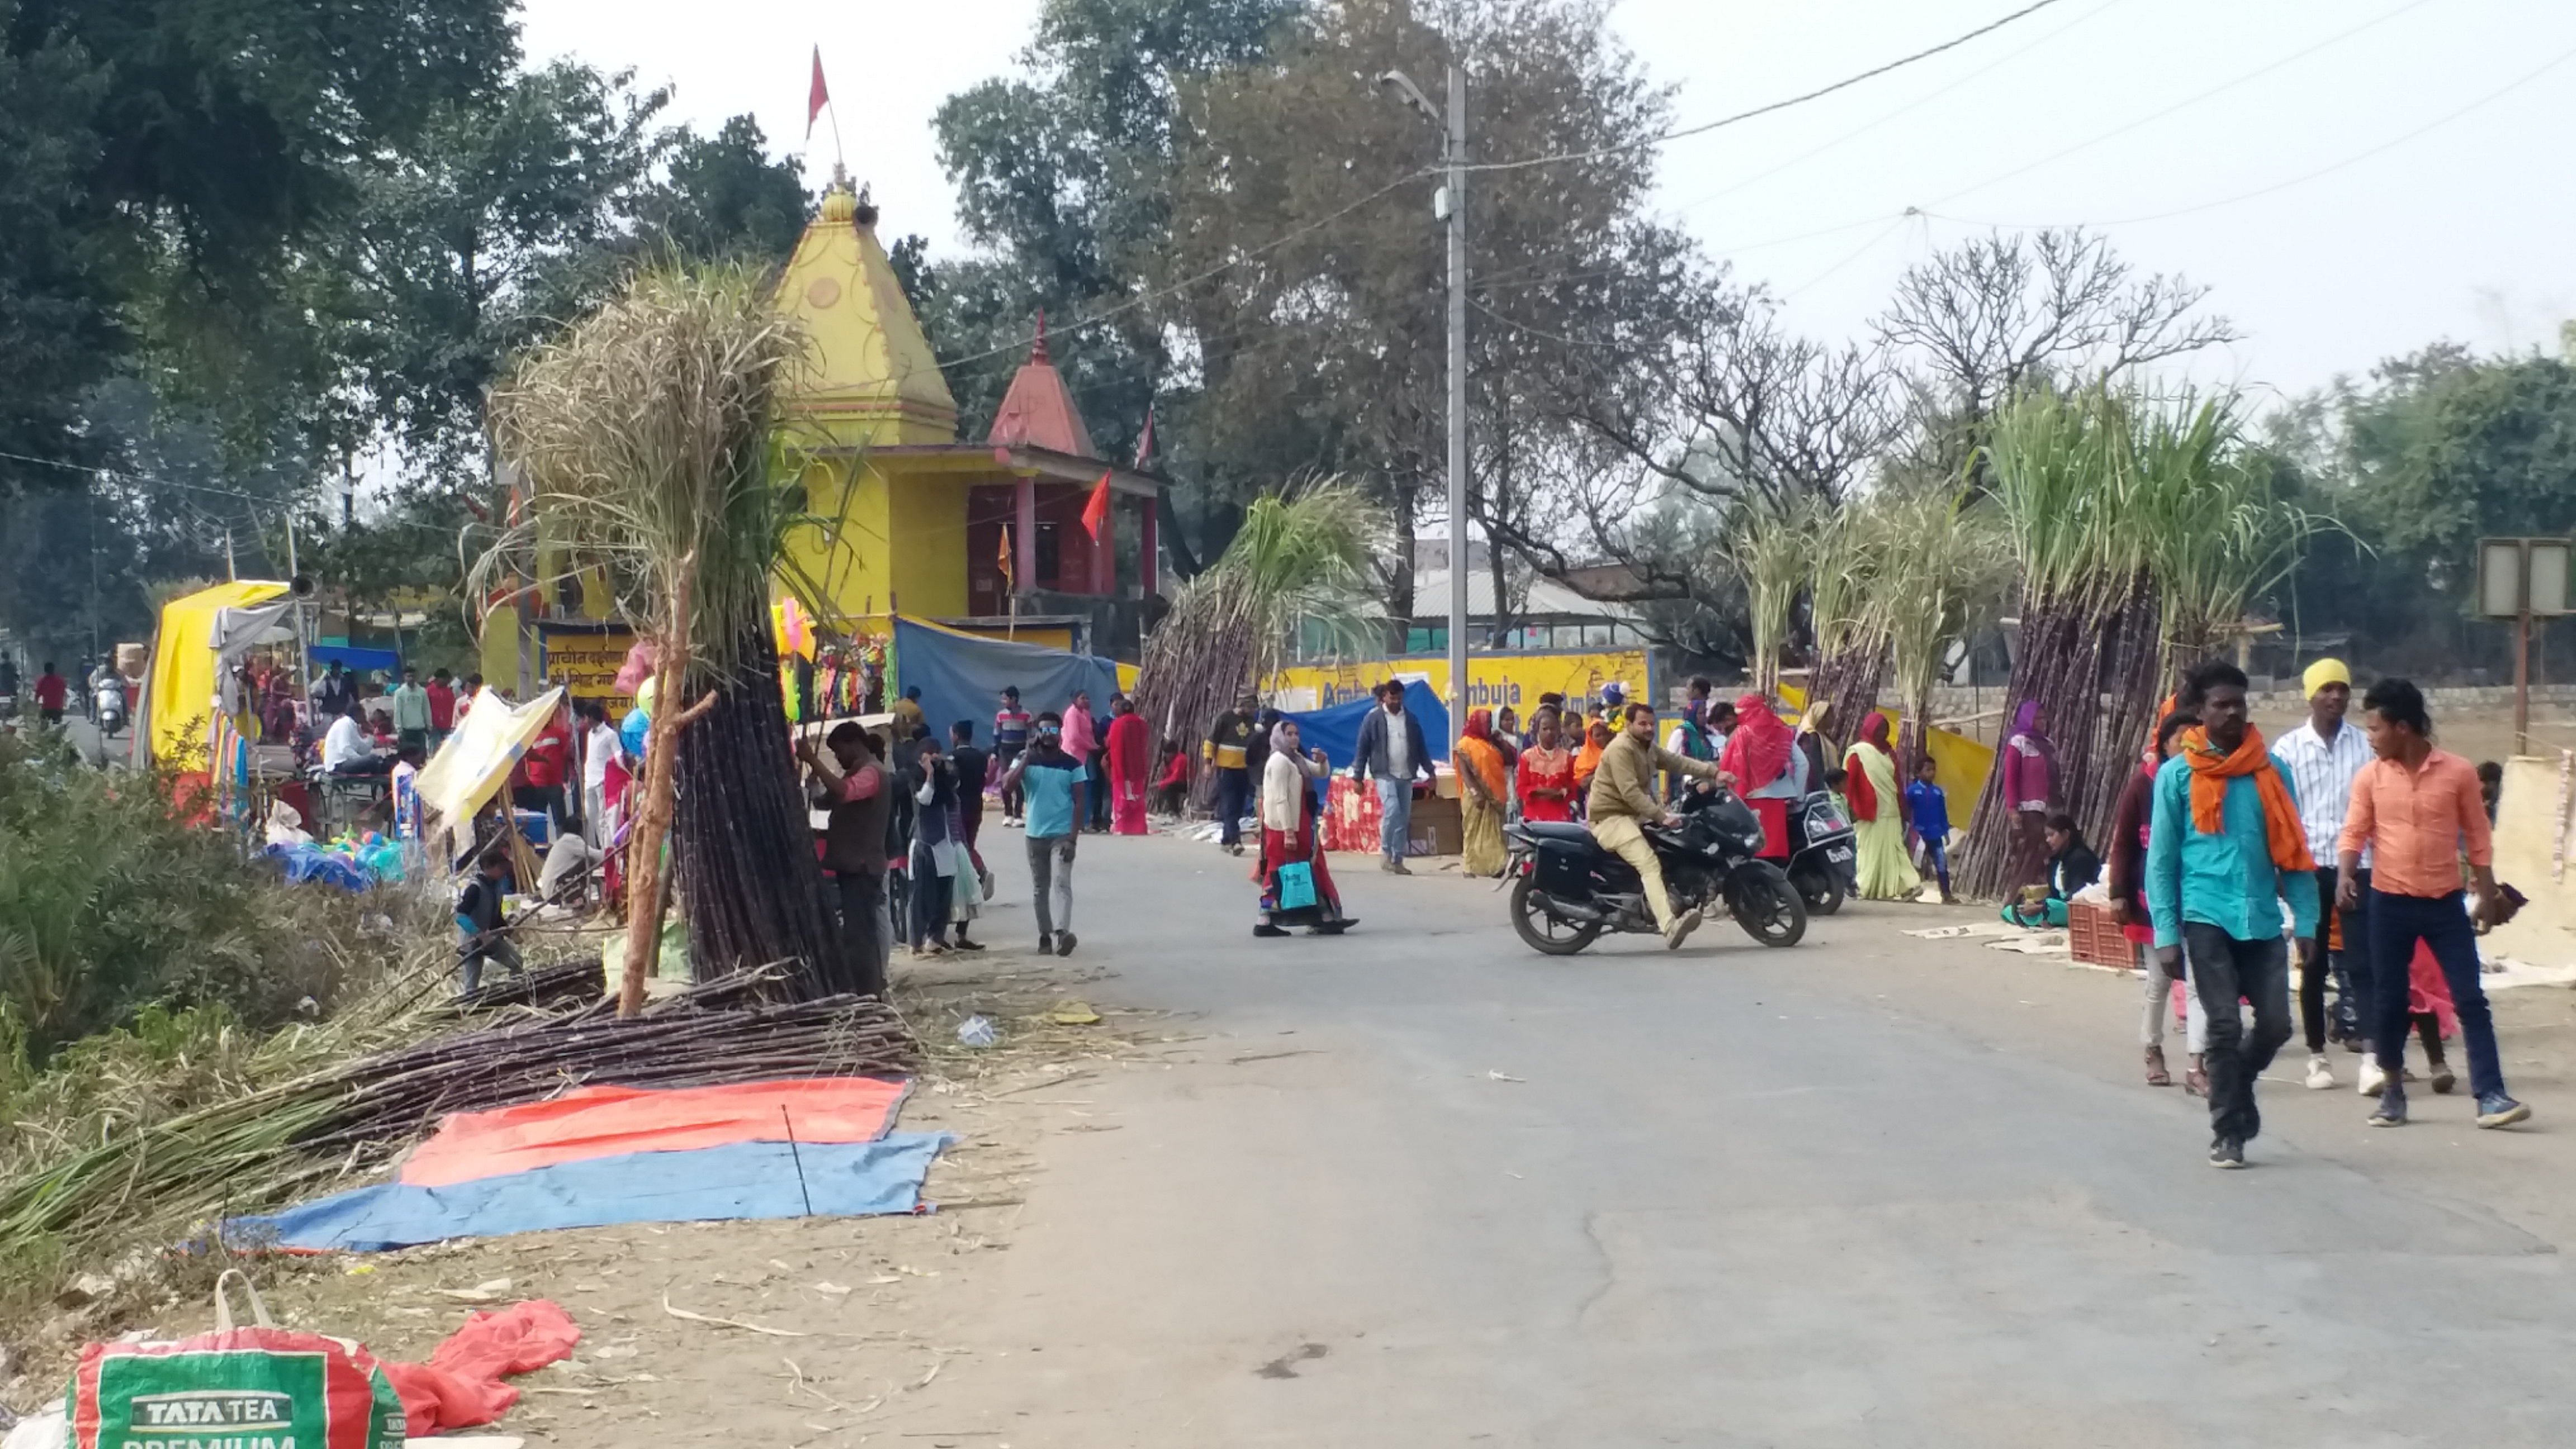 banganga fair in shahdol